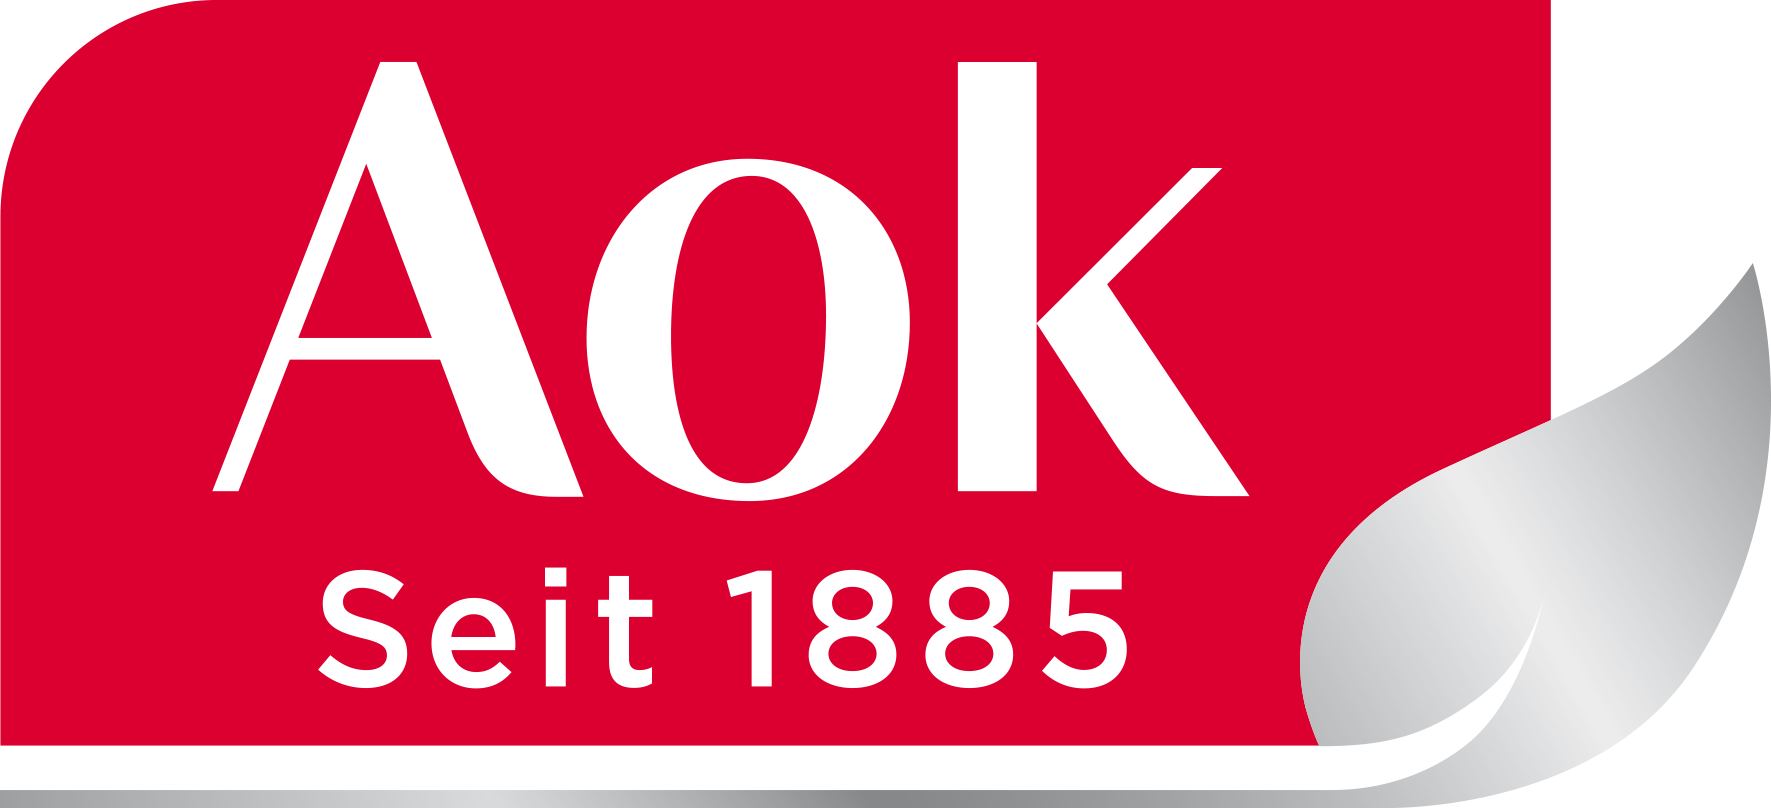 Aok Logo Vector PNG - 97889